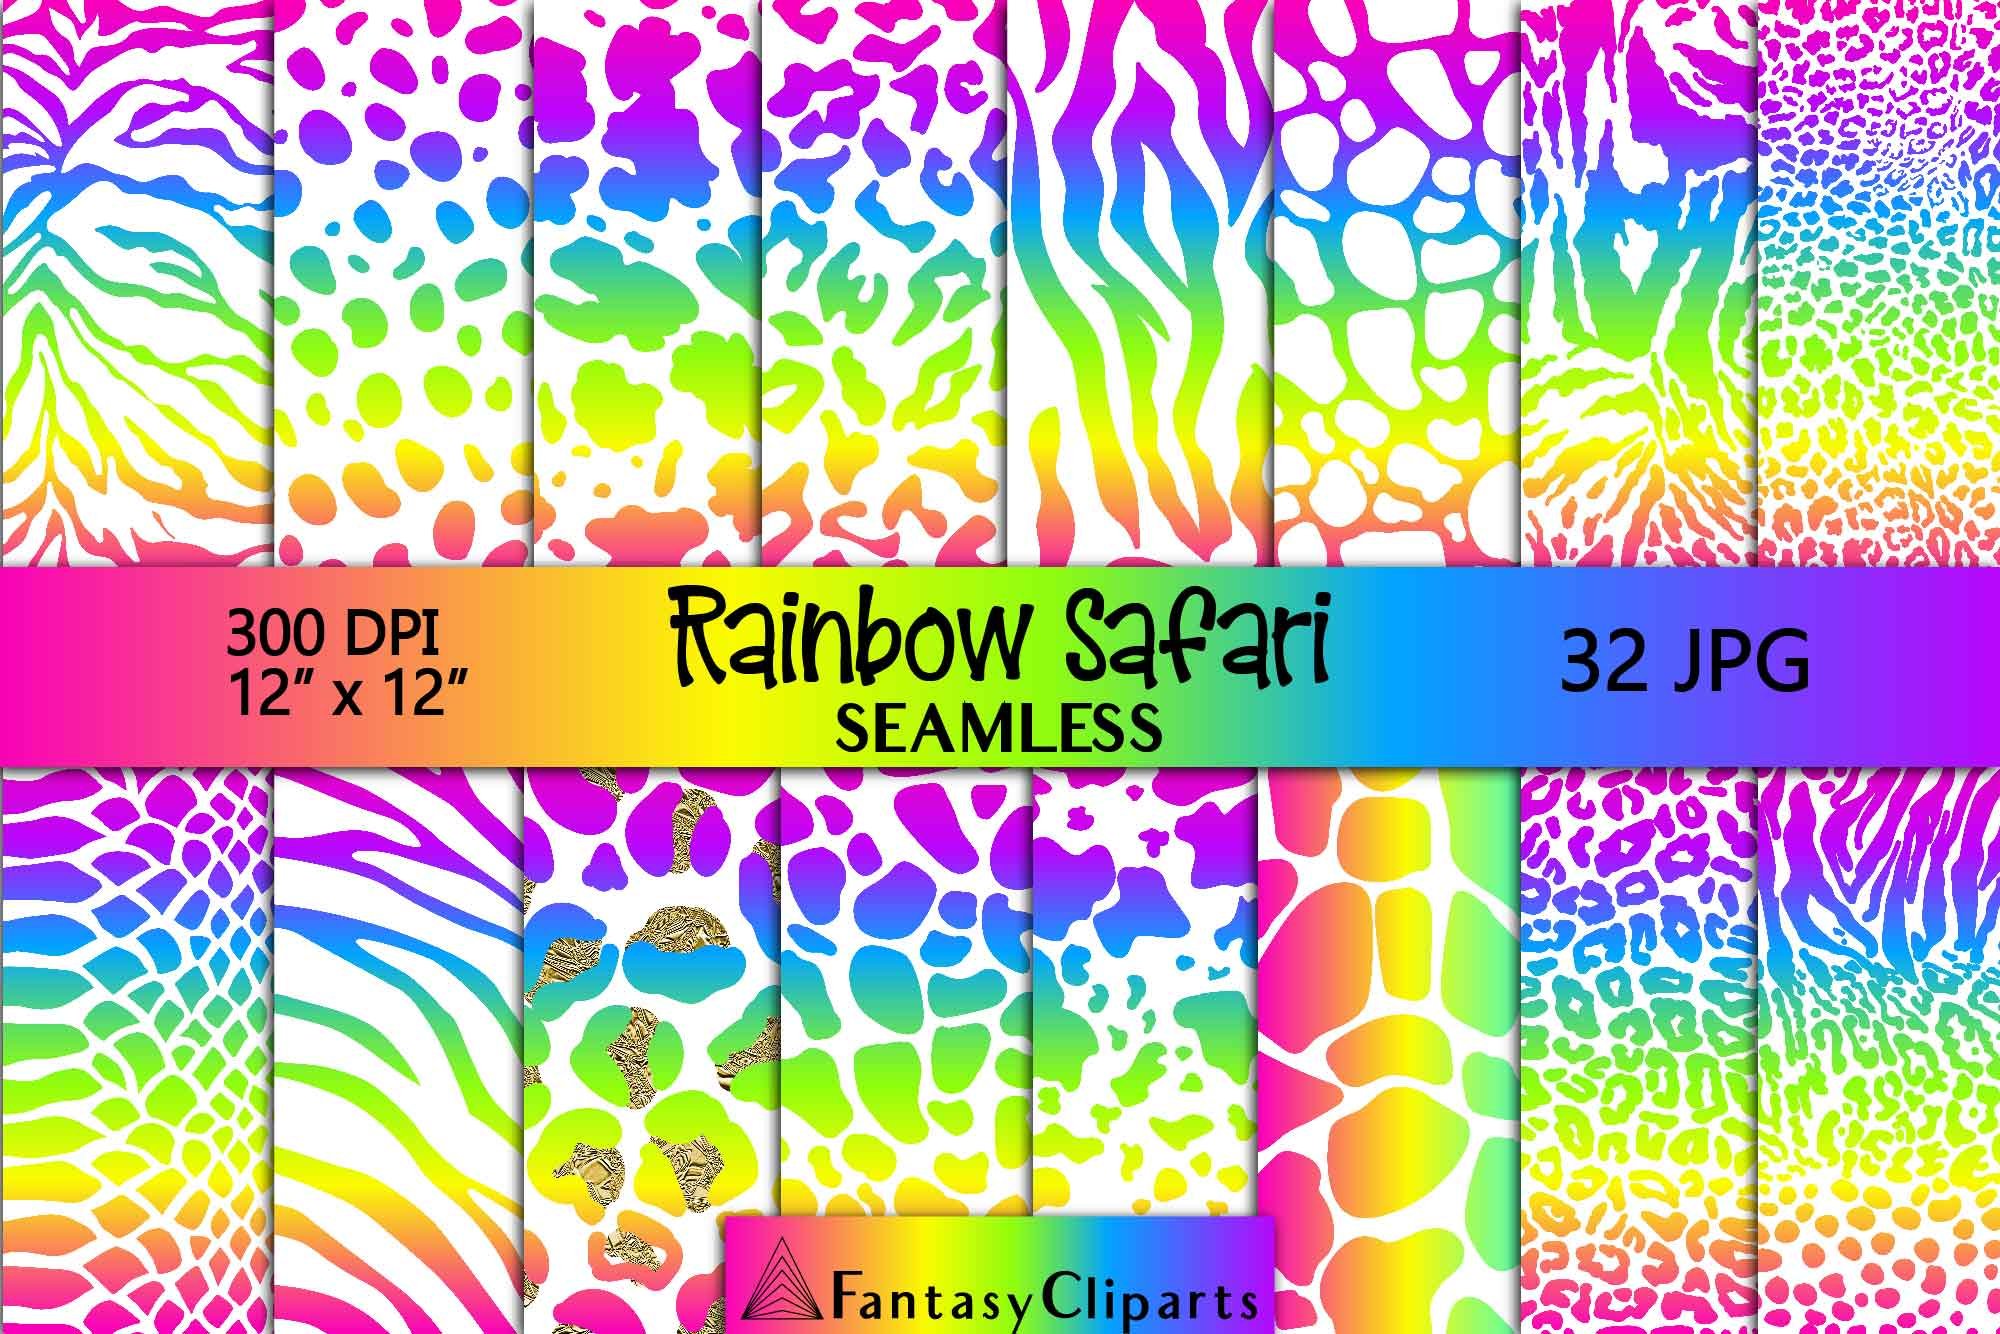 Neon Animal Print | Rainbow Safari cover image.